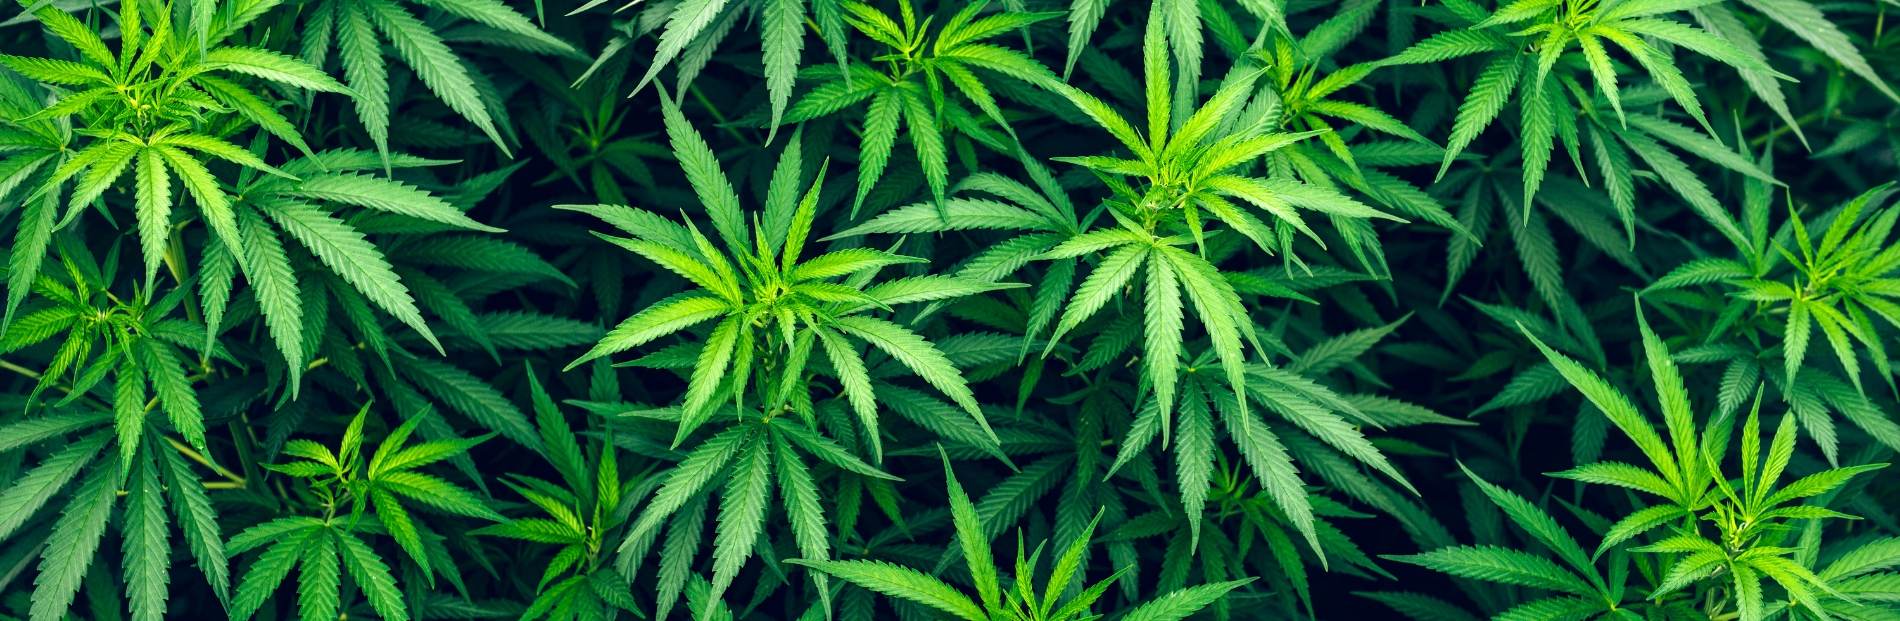 fertility and marijuana weed